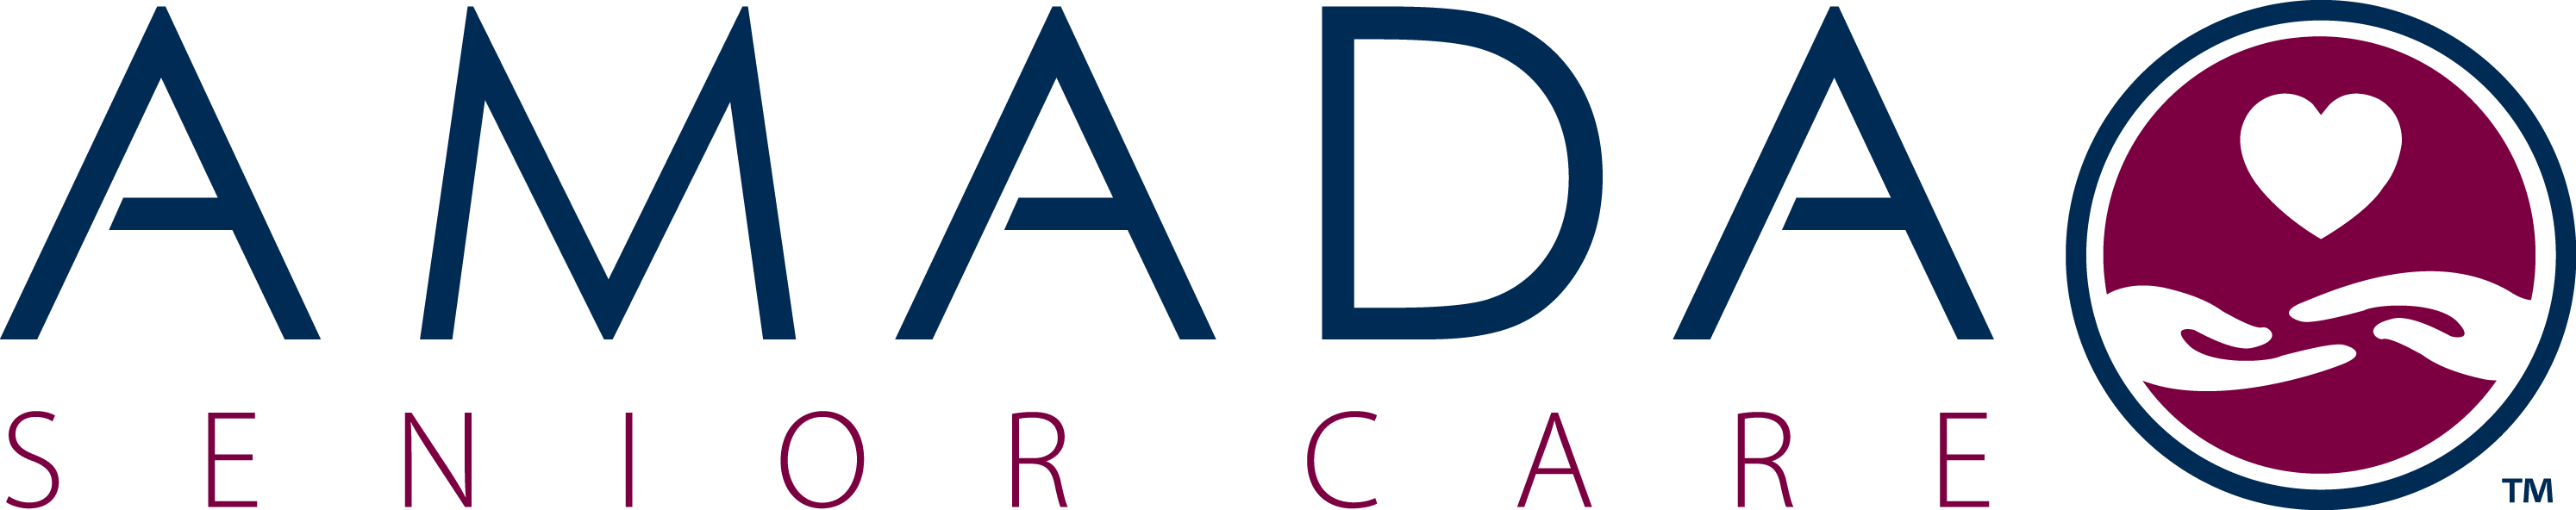 Amada Senior Care - Amada Senior Care Logo (2988x592)